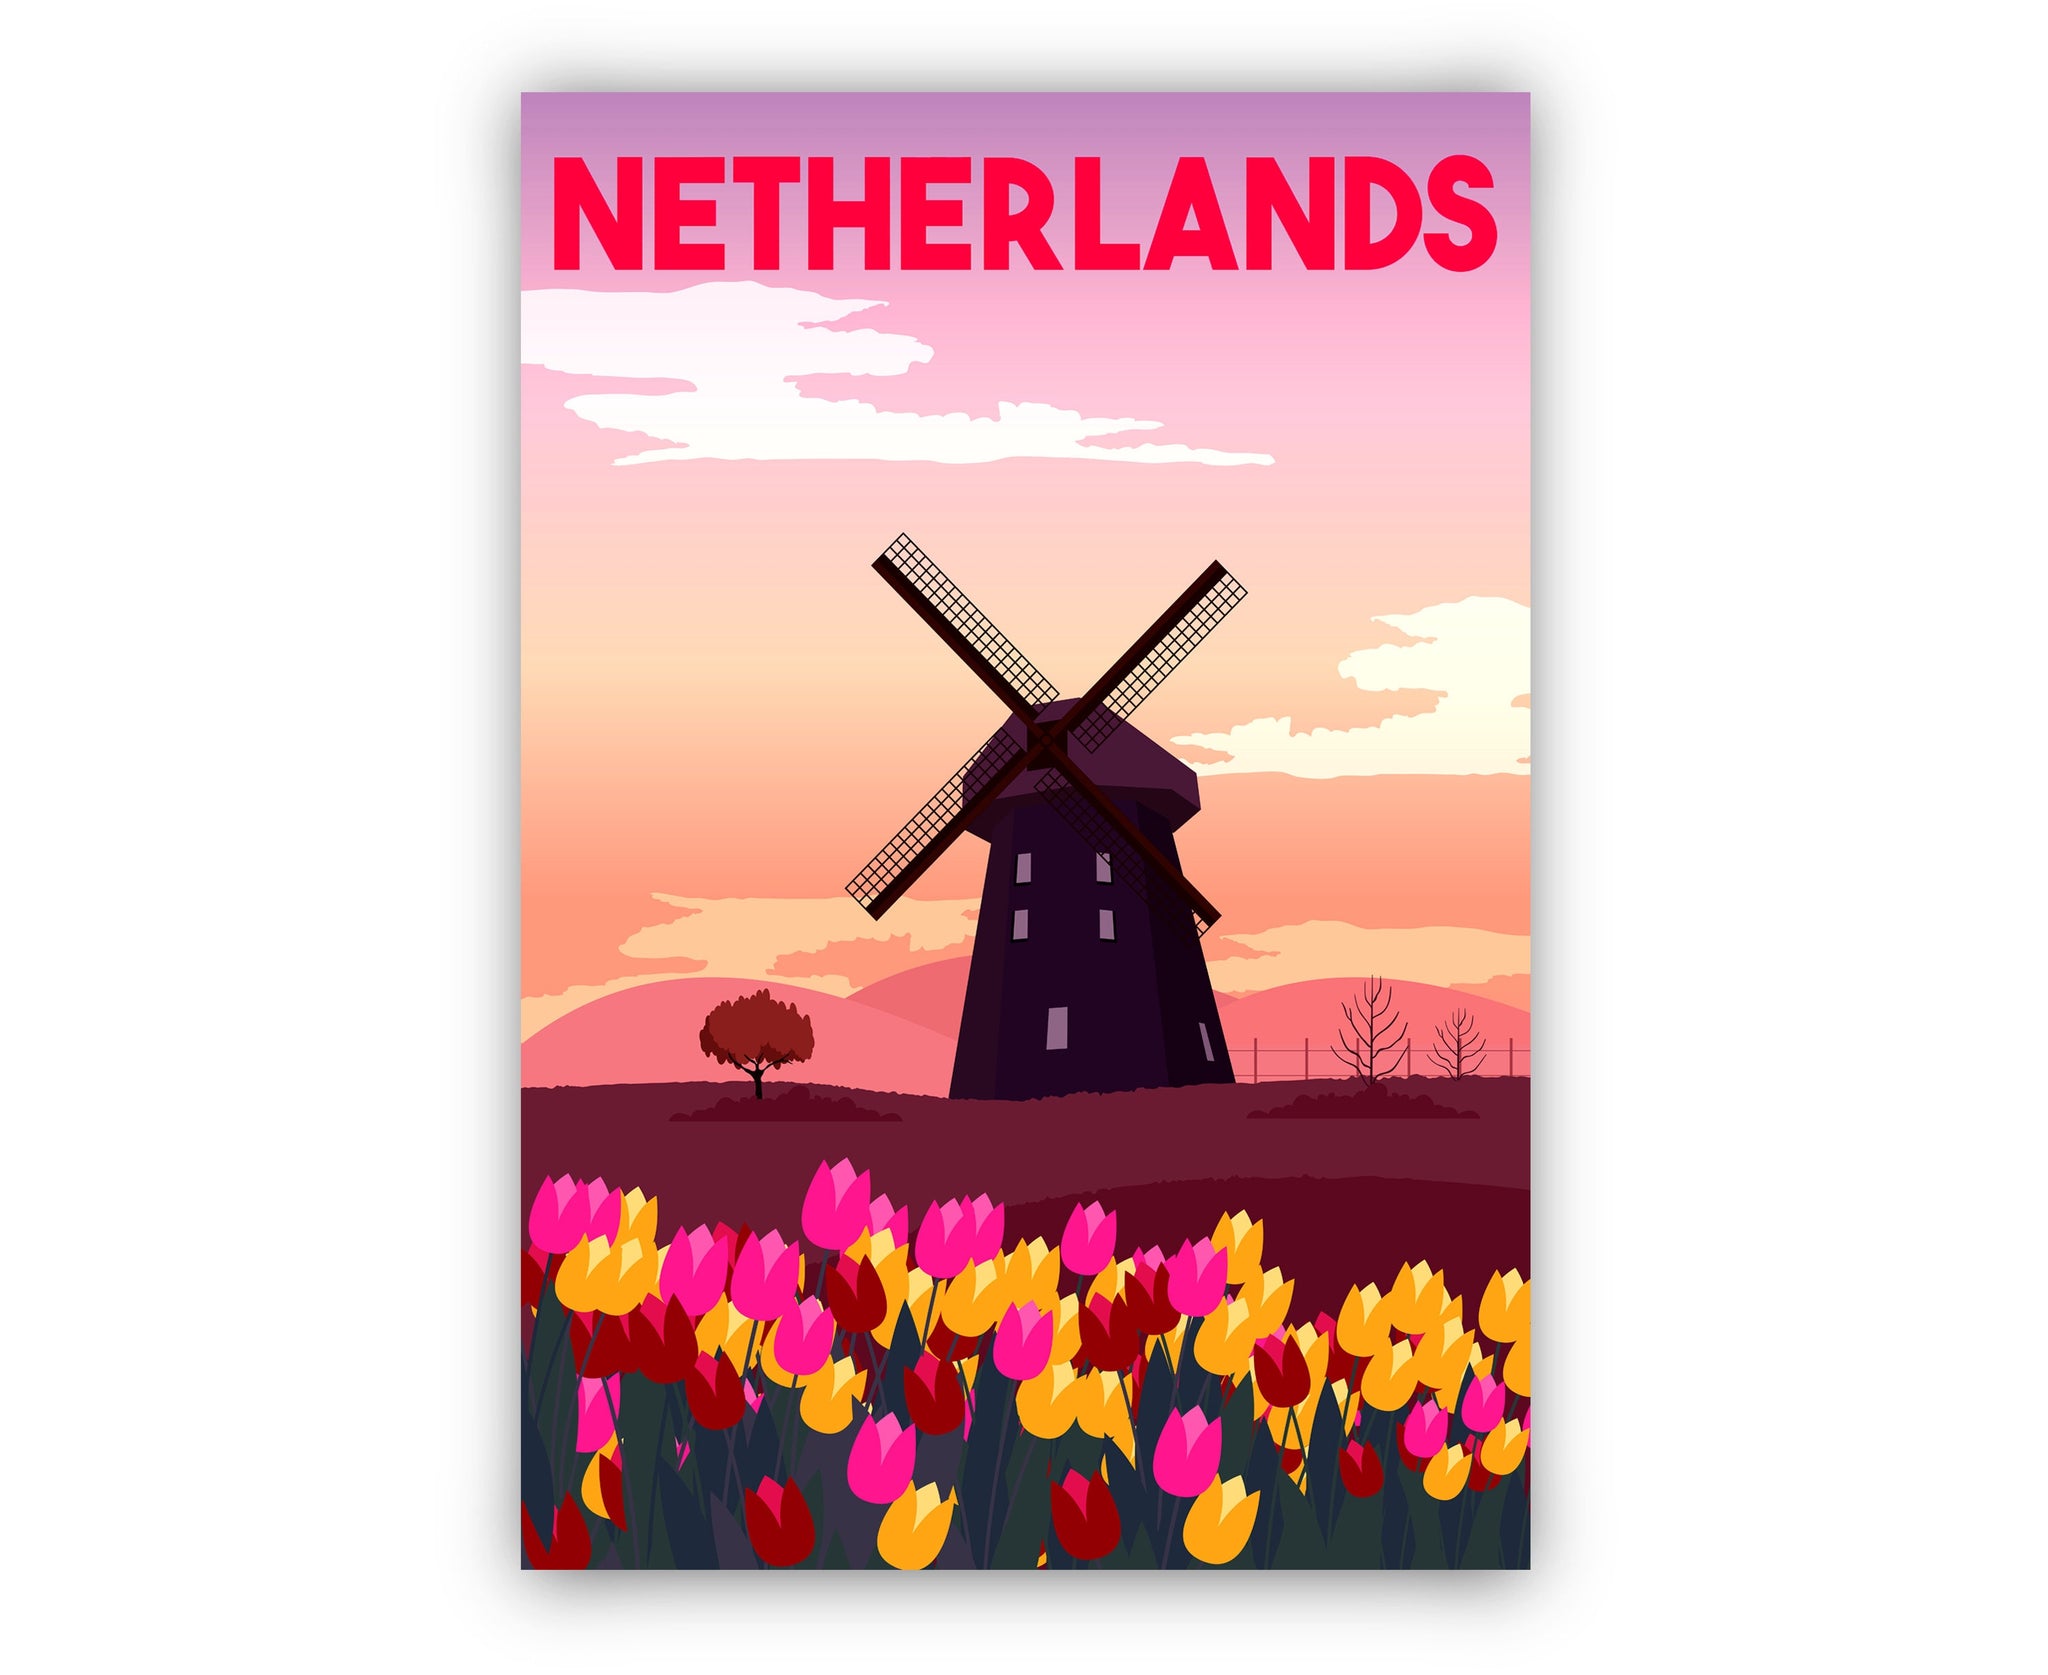 NETHERLANDS RETRO TRAVEL poster, Netherlands Cityscape and Landmark poster art, Home wall art, Office wall decoration, Housewarming gift